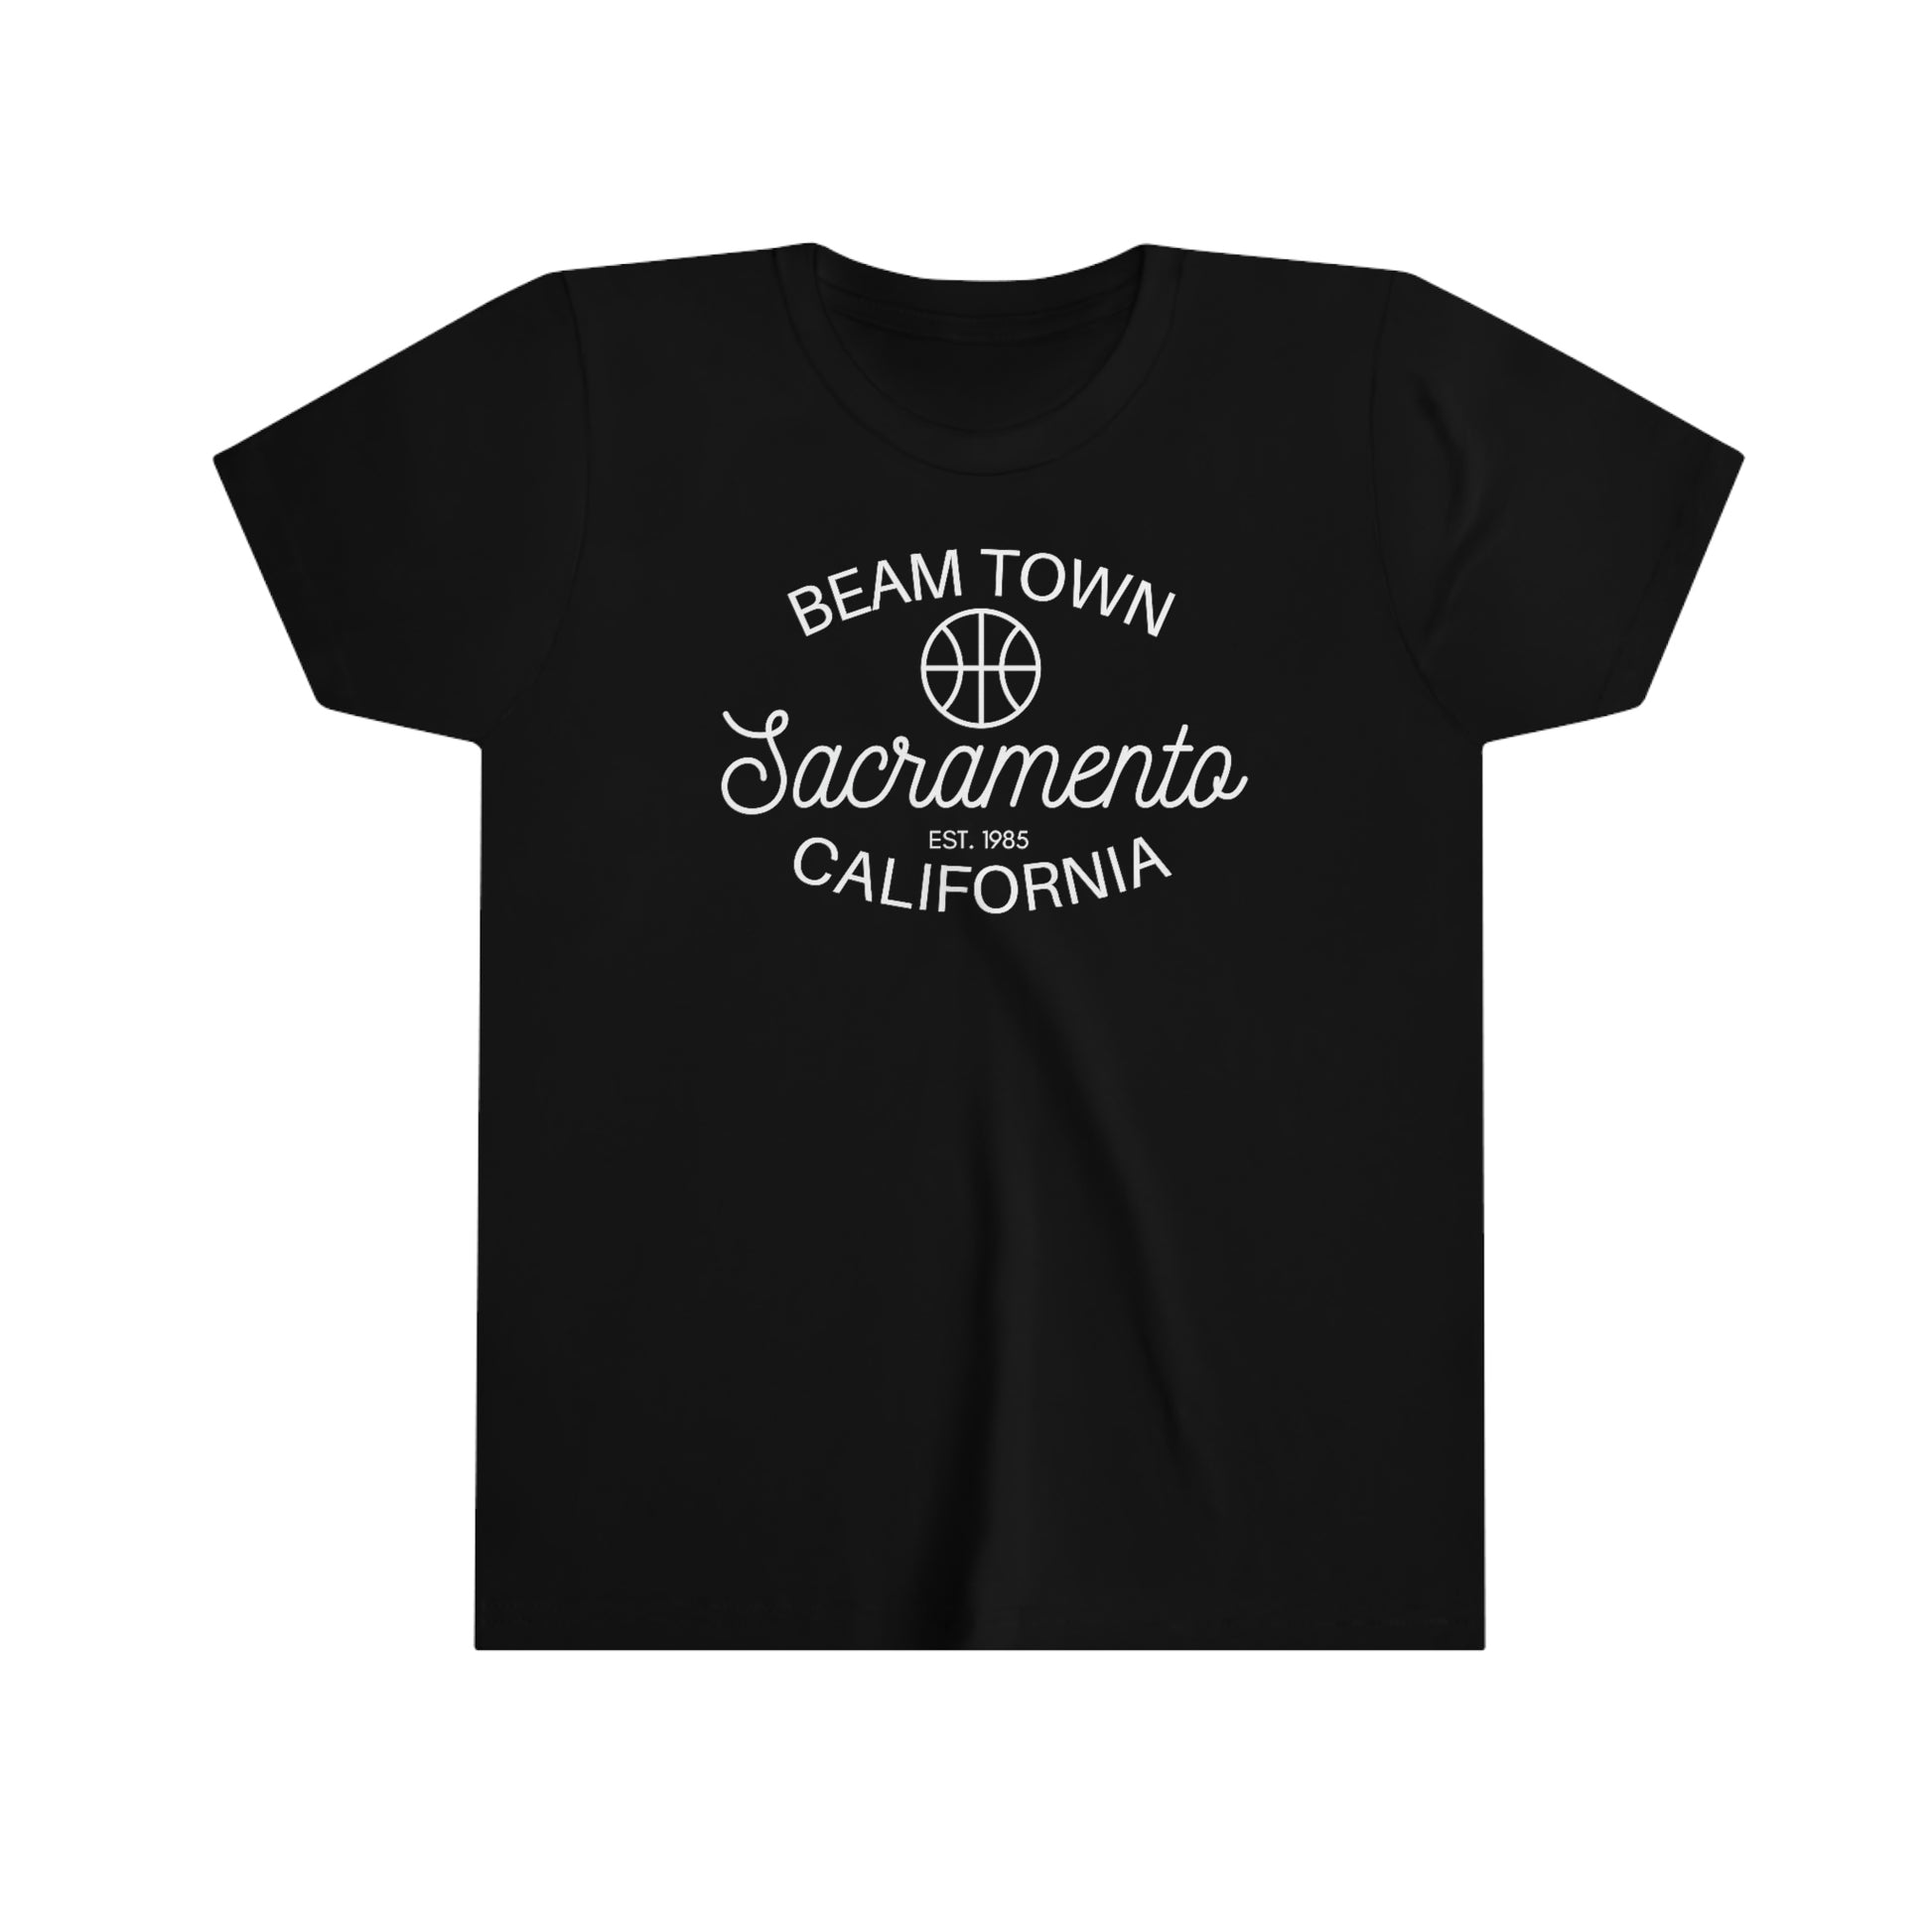 Retro BeamTown Youth T-Shirt, Sacramento Basketball, Kids Youth Unisex Tee, Sac Basketball Gift Kids Fan Gift, Light the Beam Shirt, Vintage Vibe, Retro Style Tee Shirt, Black Shirt